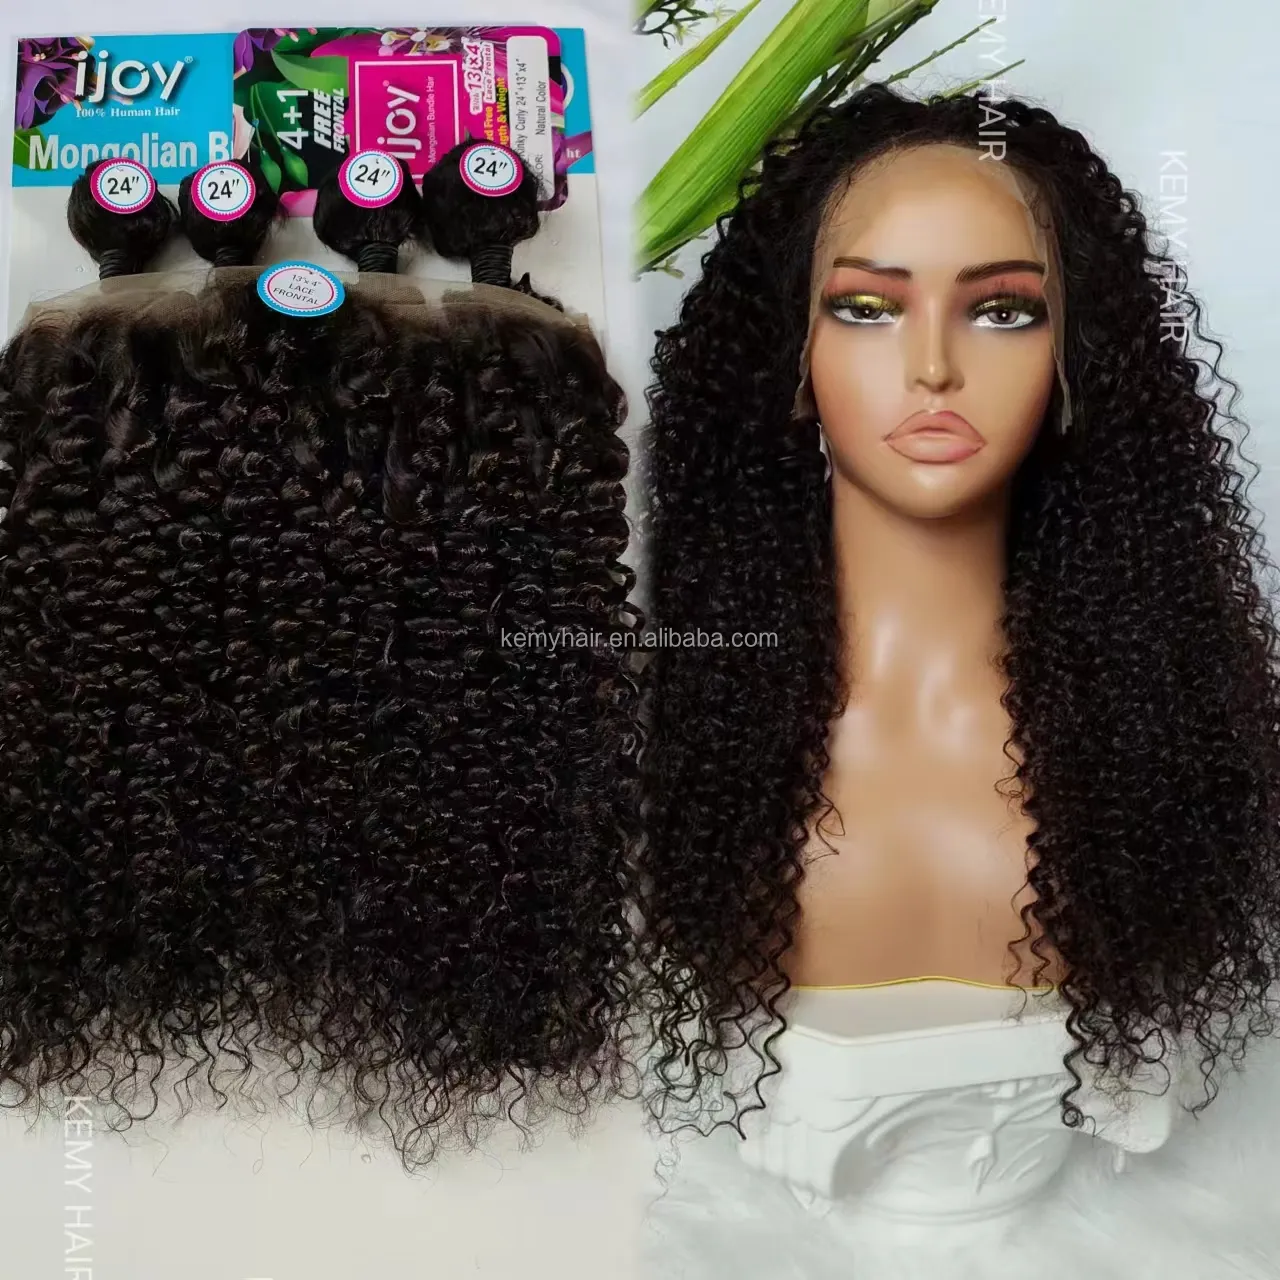 KEMY HAIR Wholesale Blend Hair Bundles Set 13*4 & 6*4 HD parrucche anteriori in pizzo parrucche per capelli in miscela umana di colore naturale per donne nere